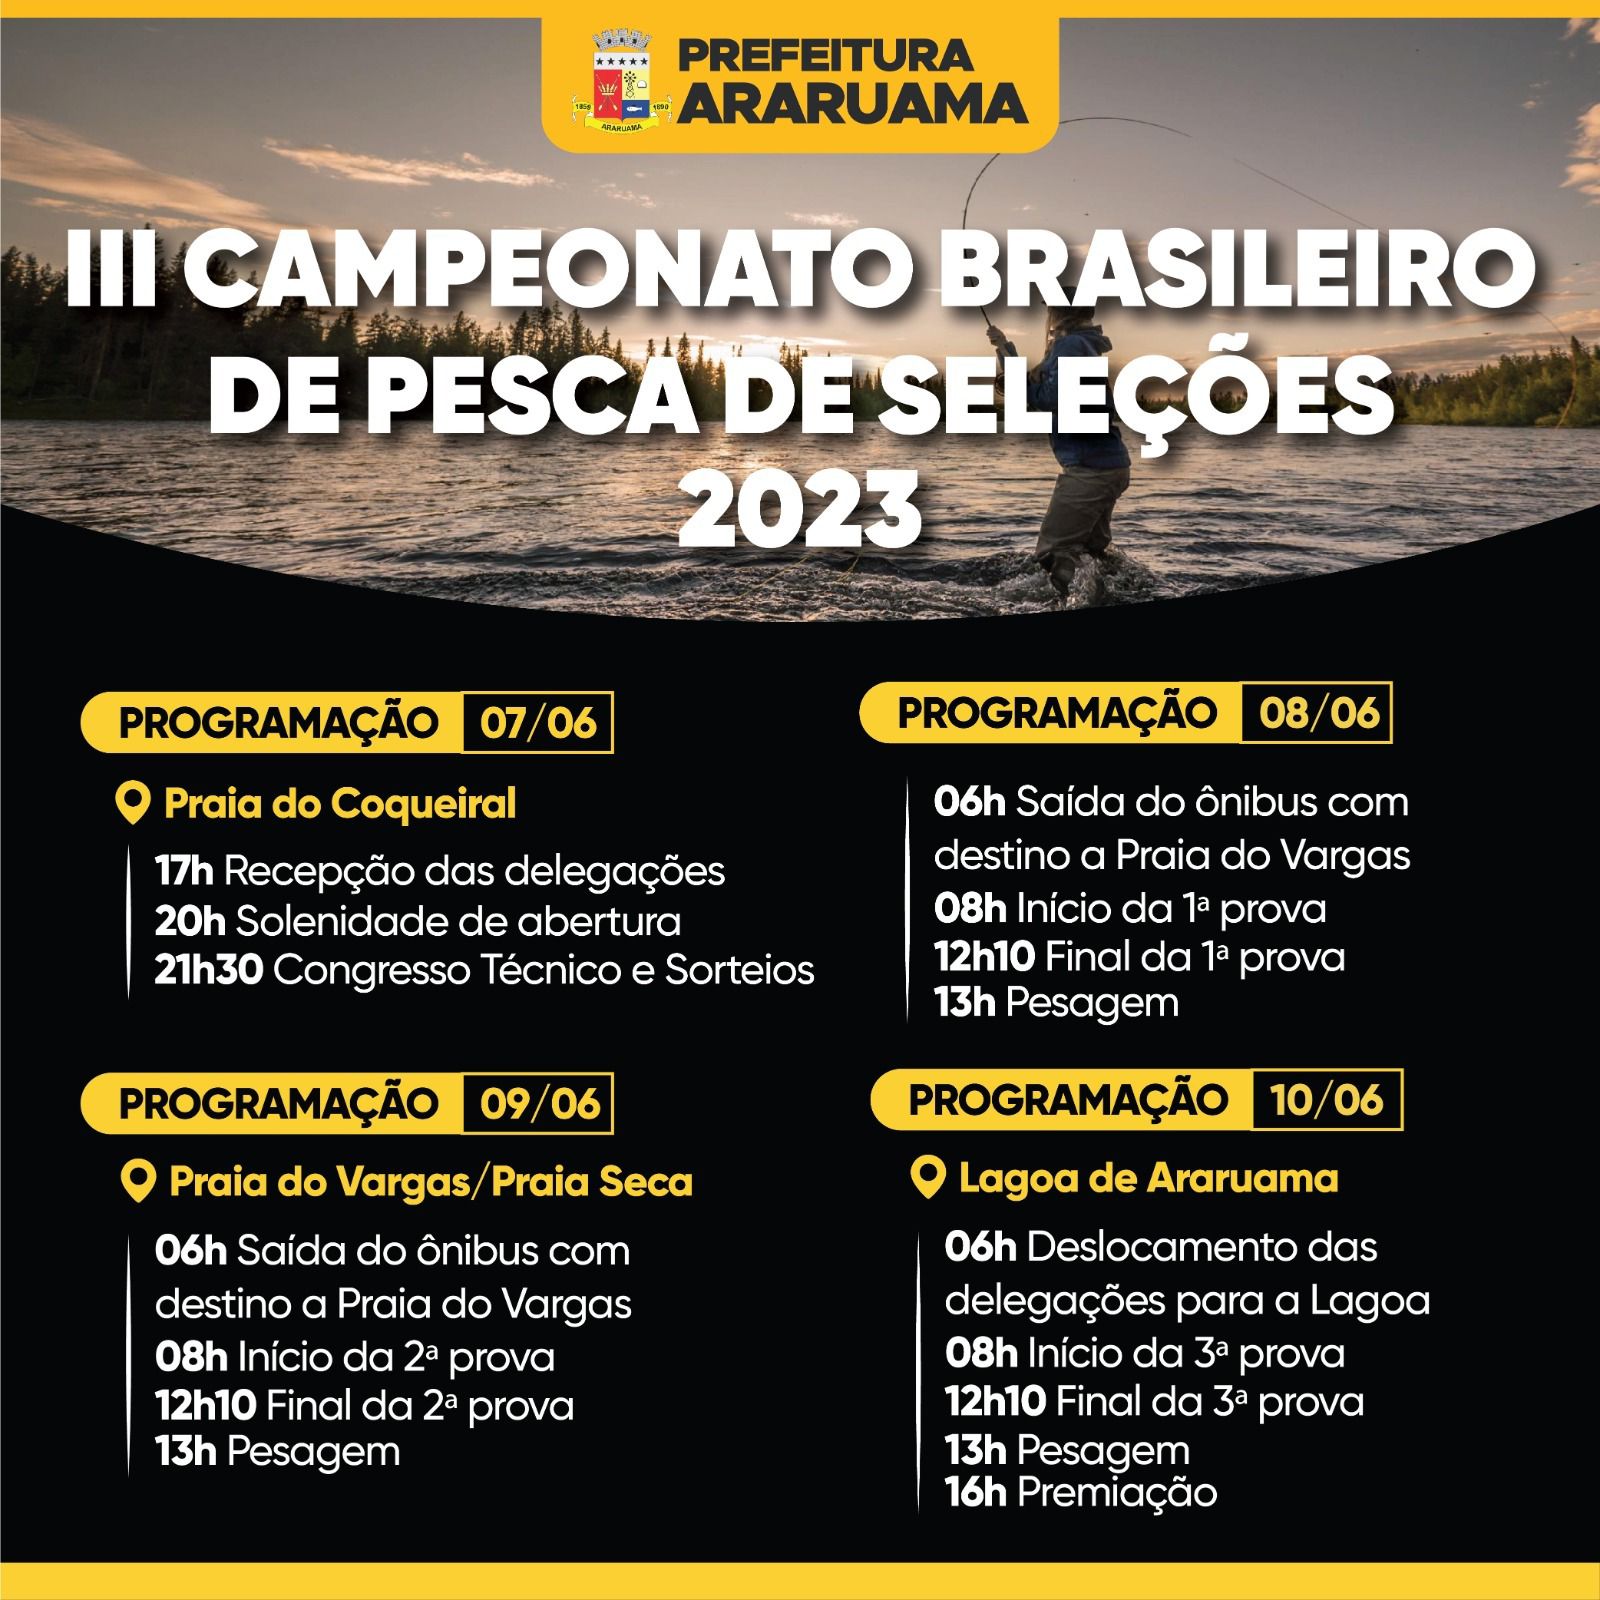 Araruama vai sediar o III Campeonato Brasileiro de Pesca de Seleções